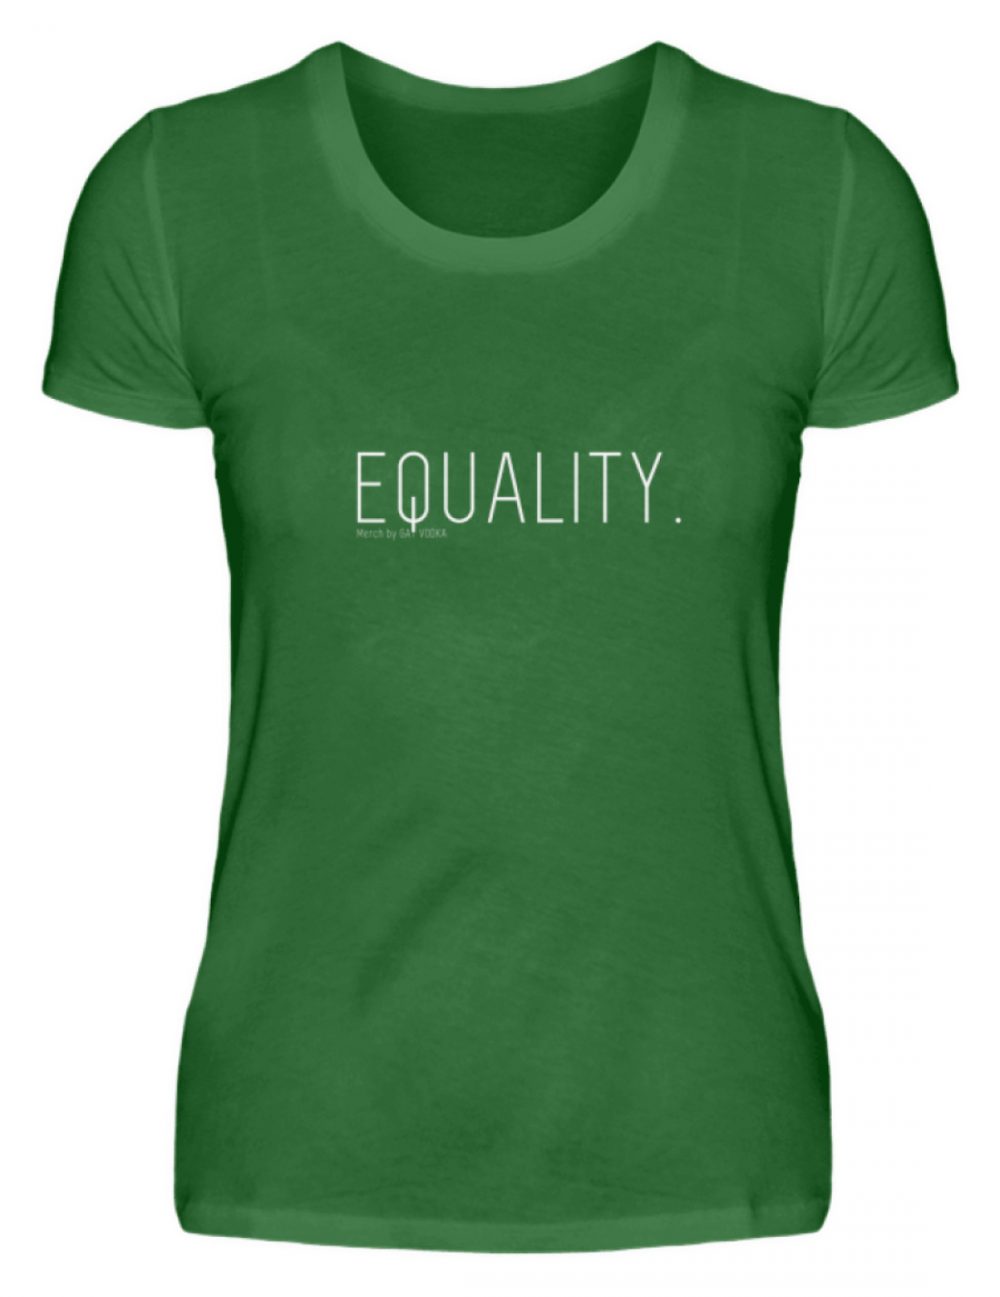 EQUALITY. - Damen Premiumshirt-30